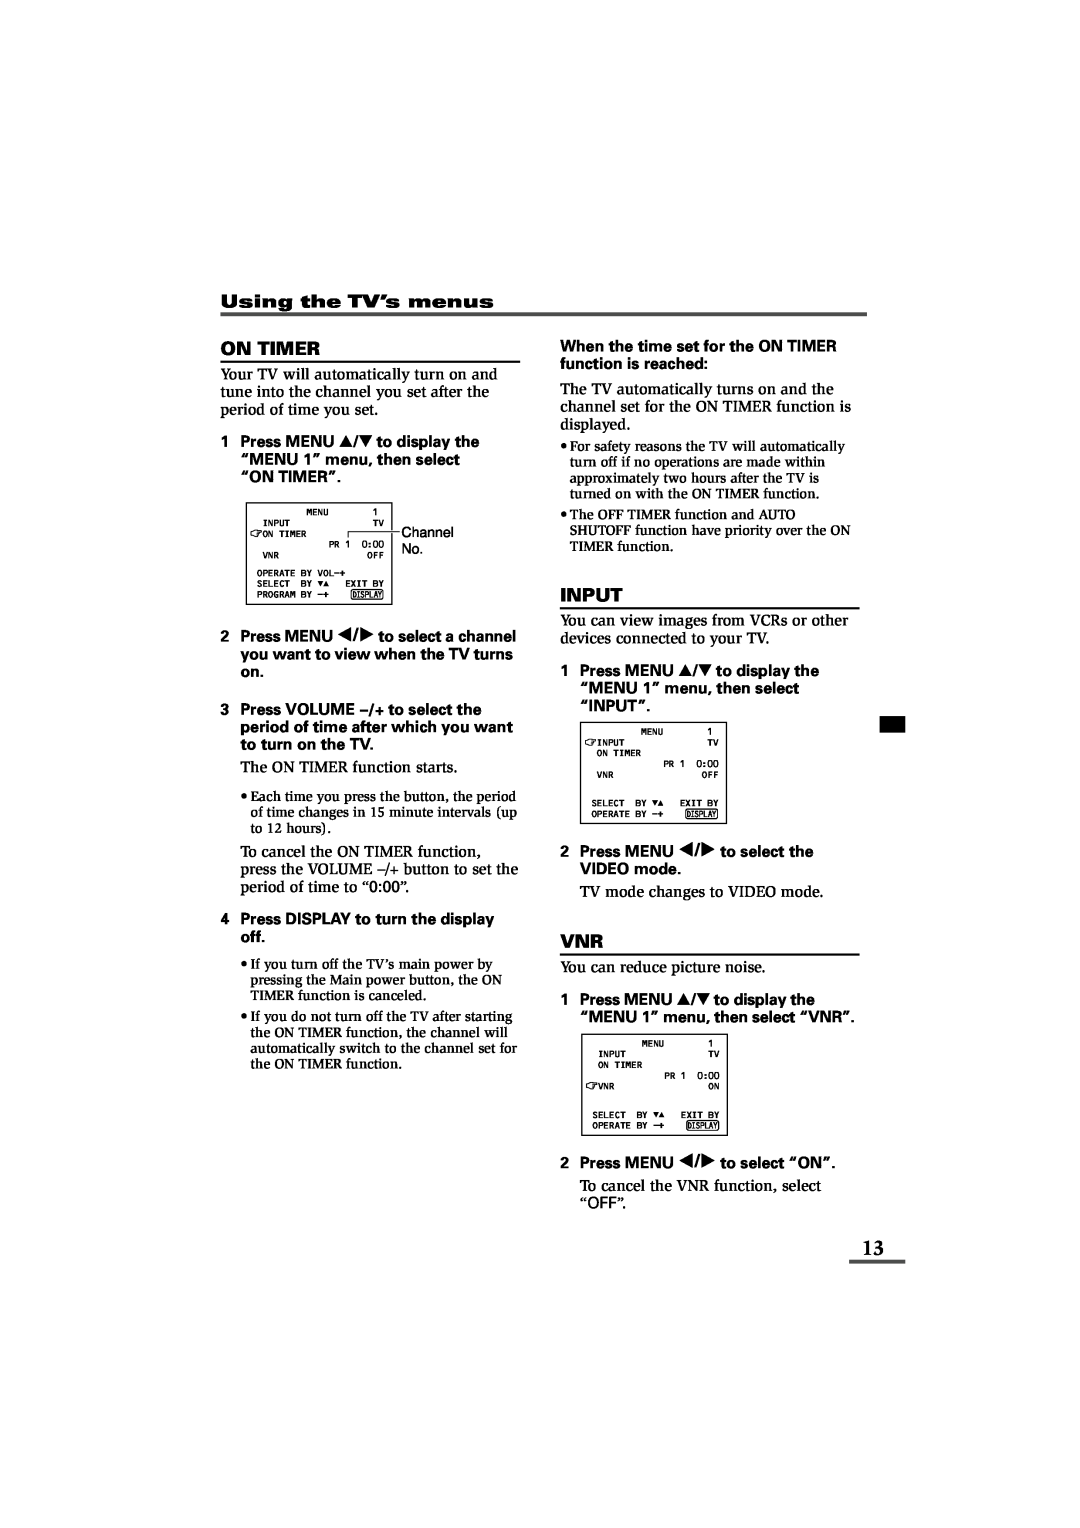 JVC AV-16KG21 Input, Using the TV’s menus, Press MENU T to display the, “MENU 1” menu, then select, “On Timer” 